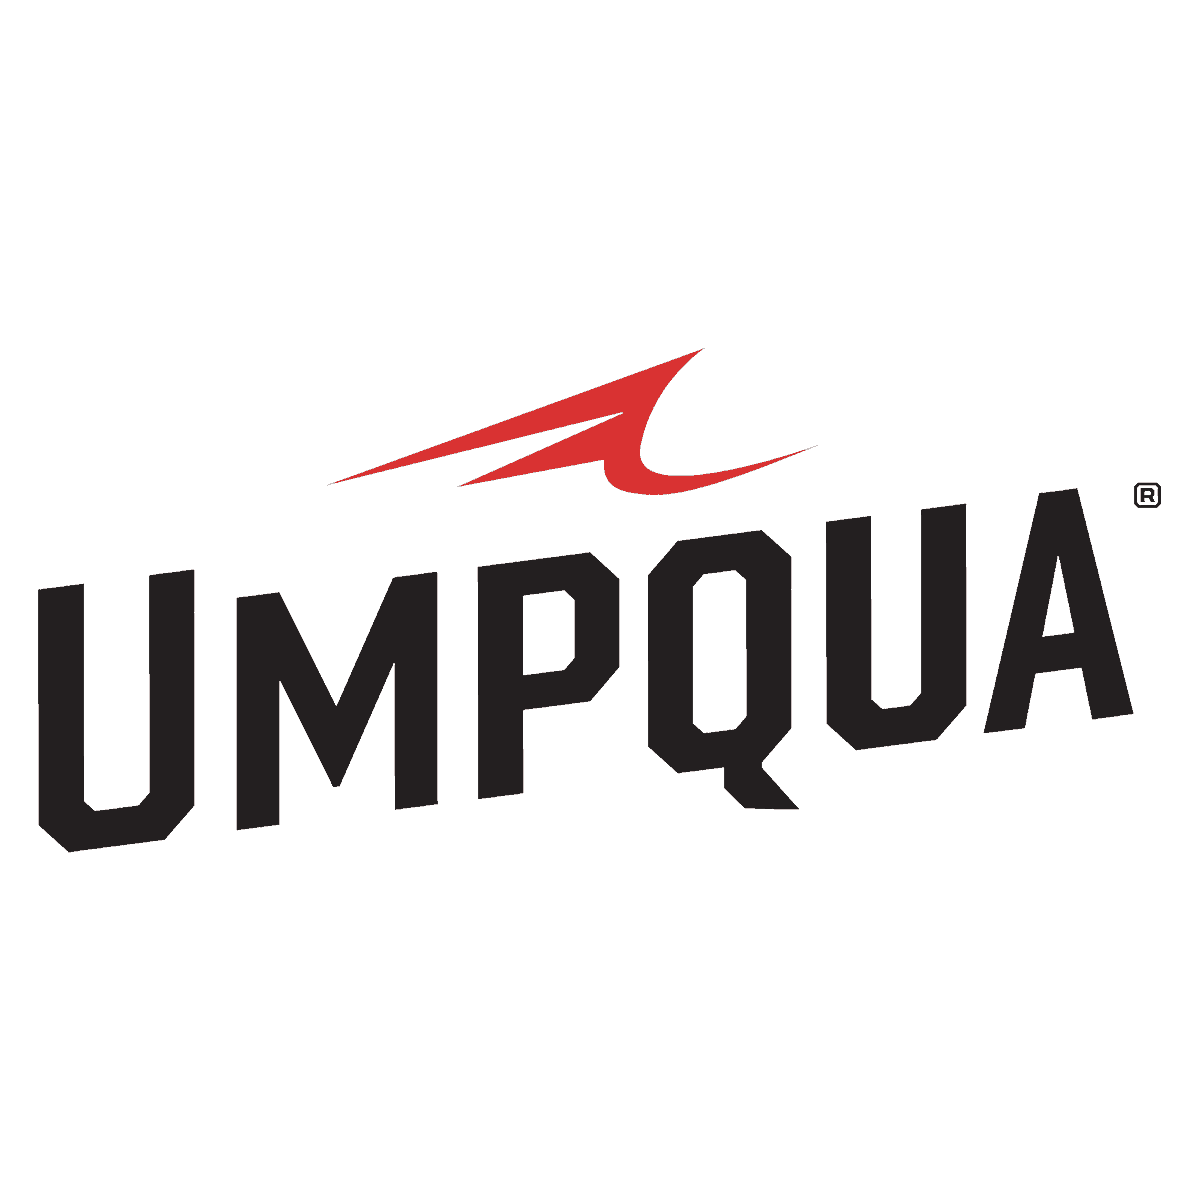 Umpqua Feather Merchants Vinyl Sticker (Large)